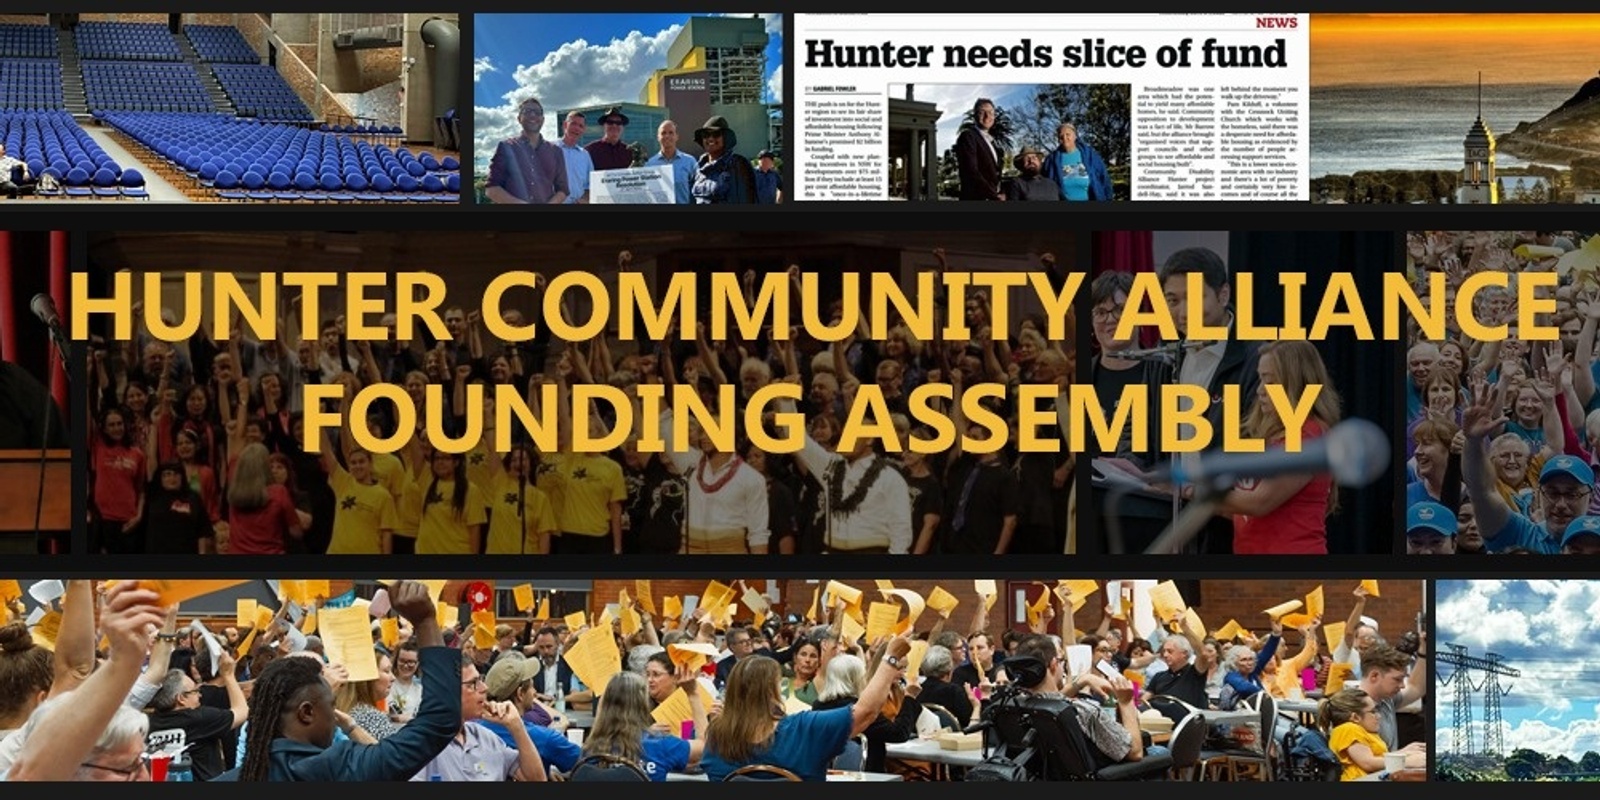 Banner image for HCA Founding Assembly (Manual registration still open via email)